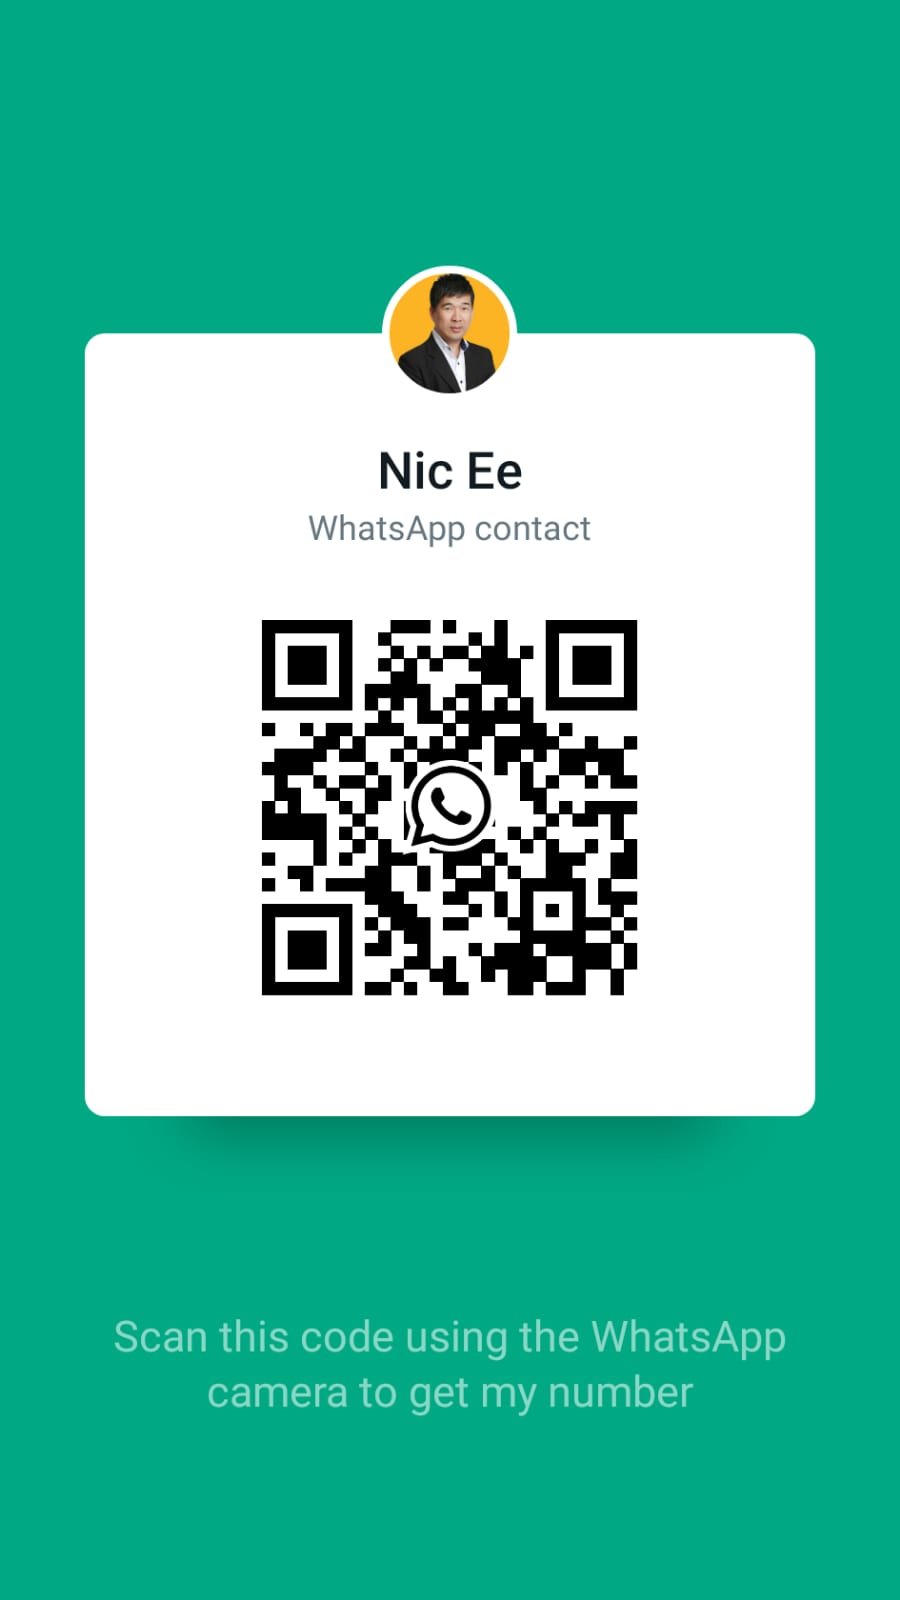 Scan the code to Whatsapp Nic Ee 